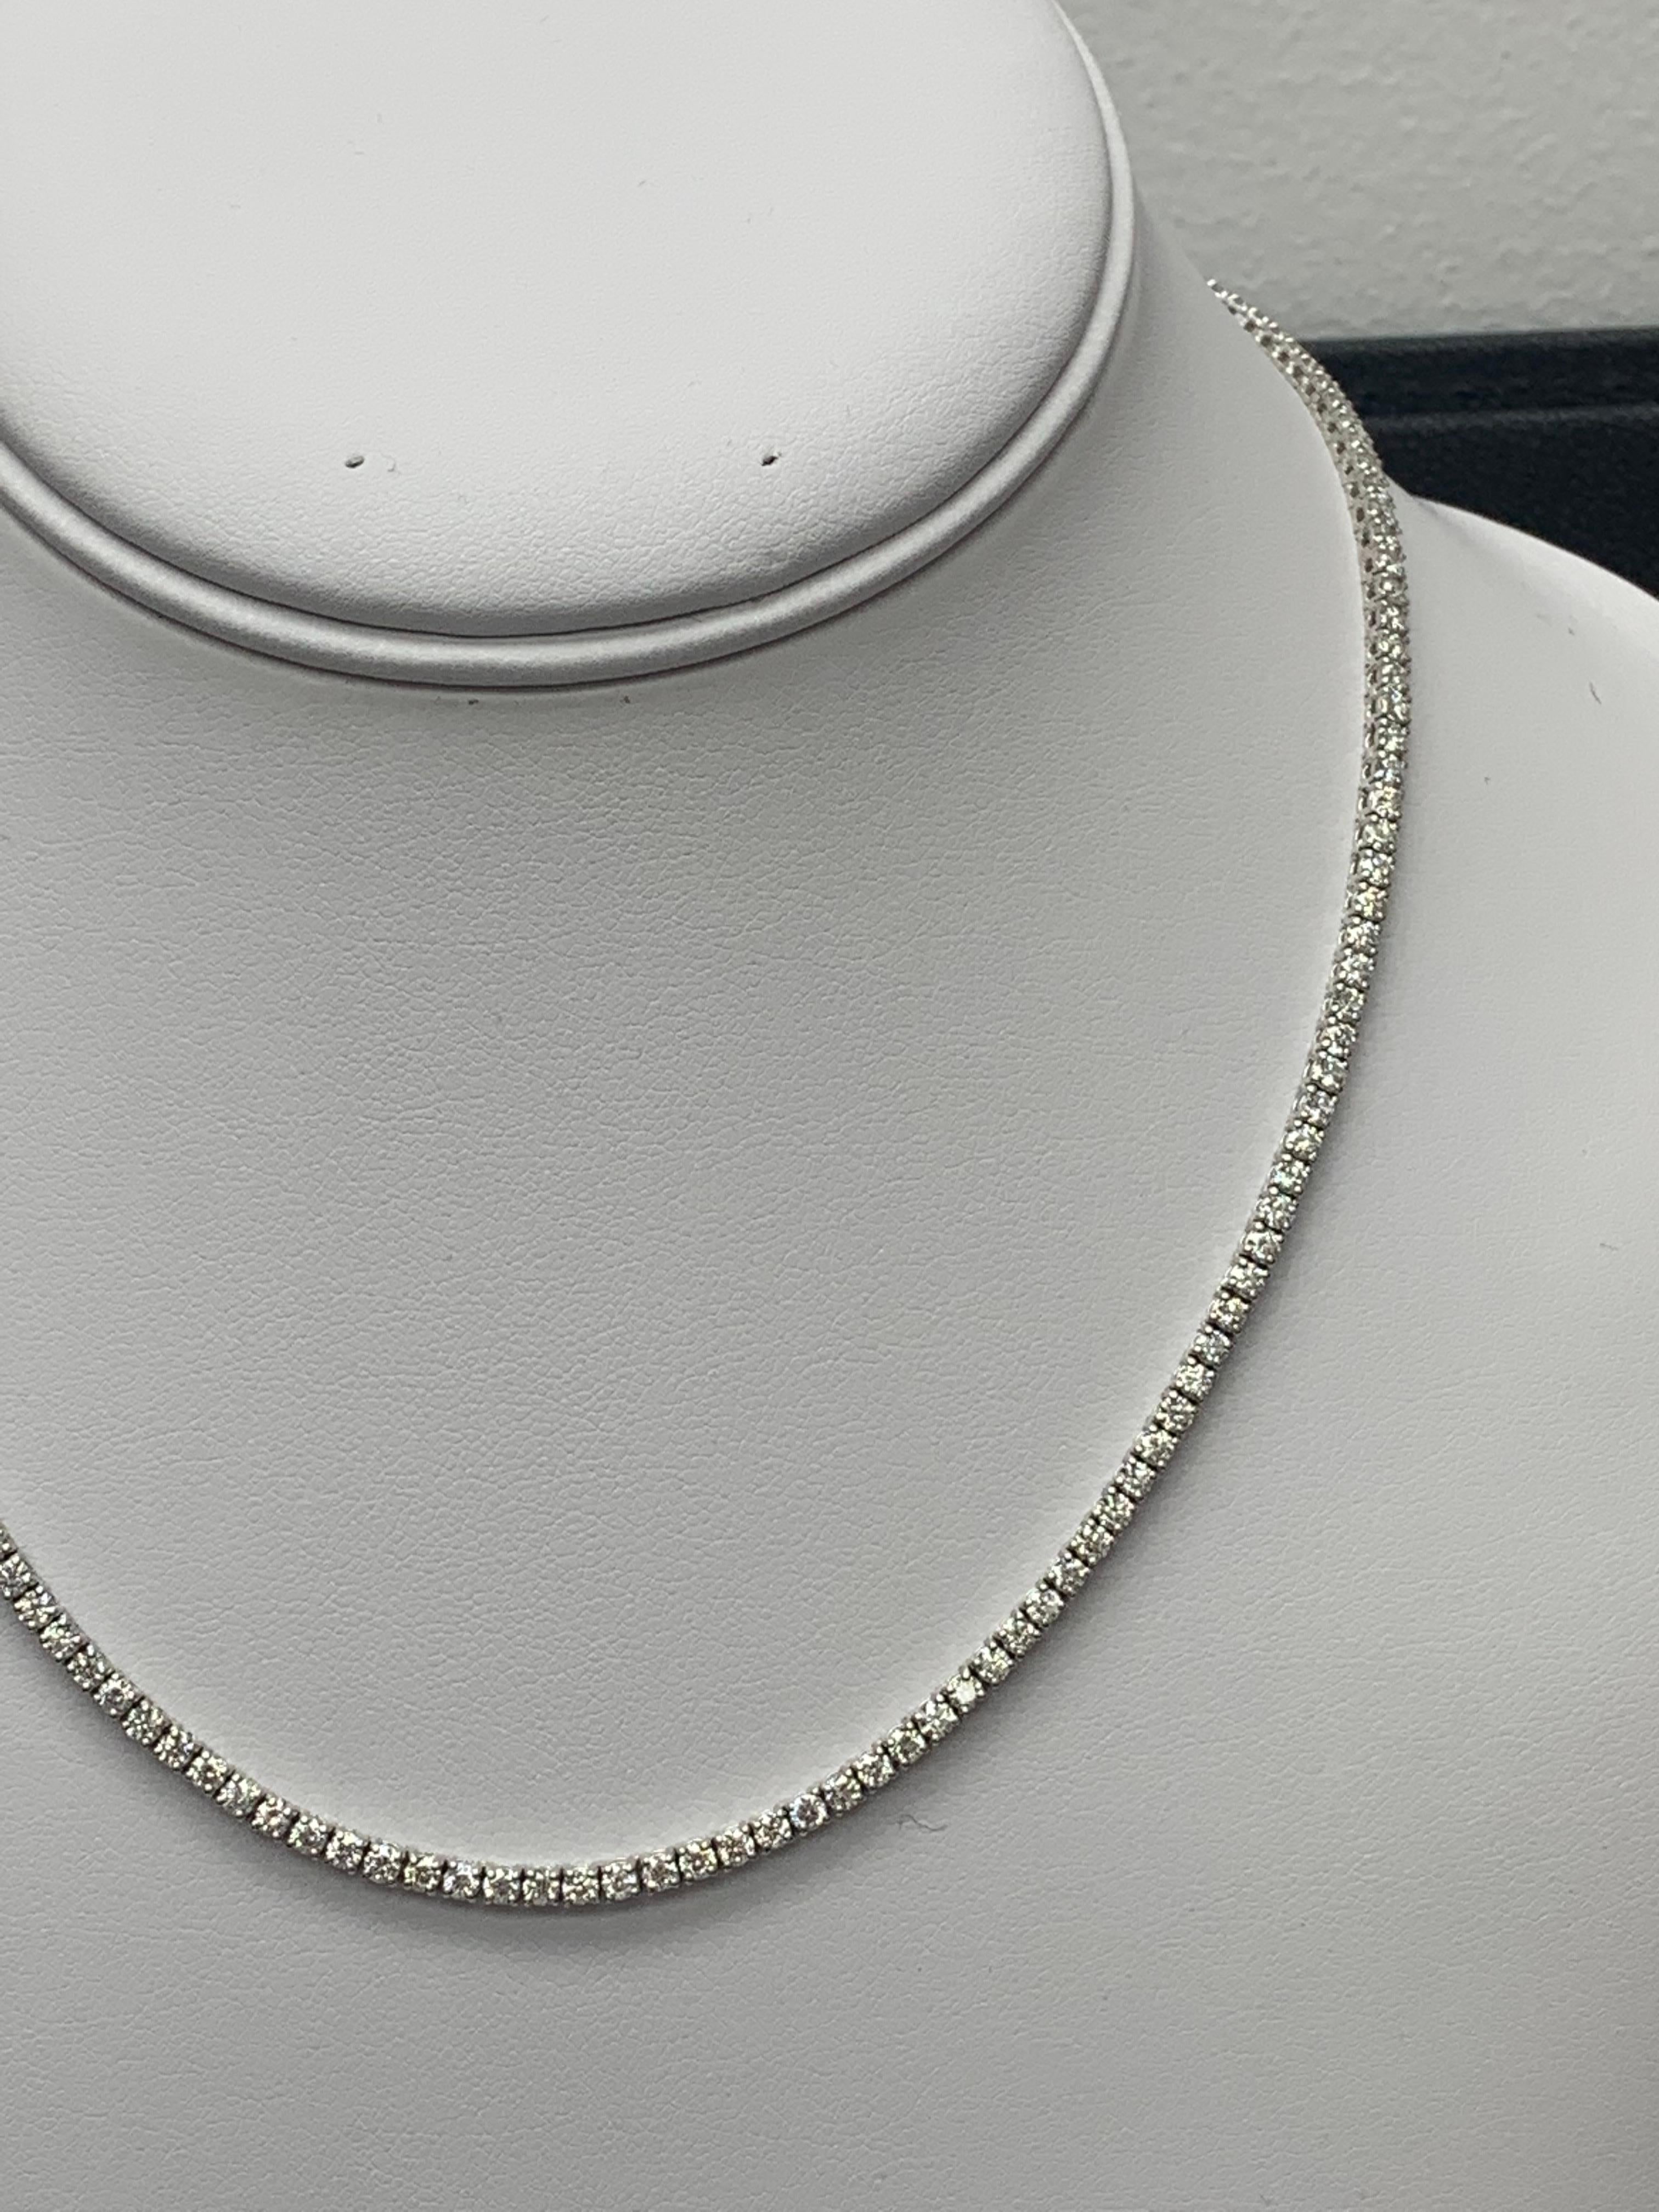 Brilliant Cut 8.01 Carat Diamond Tennis Necklace in 14K White Gold For Sale